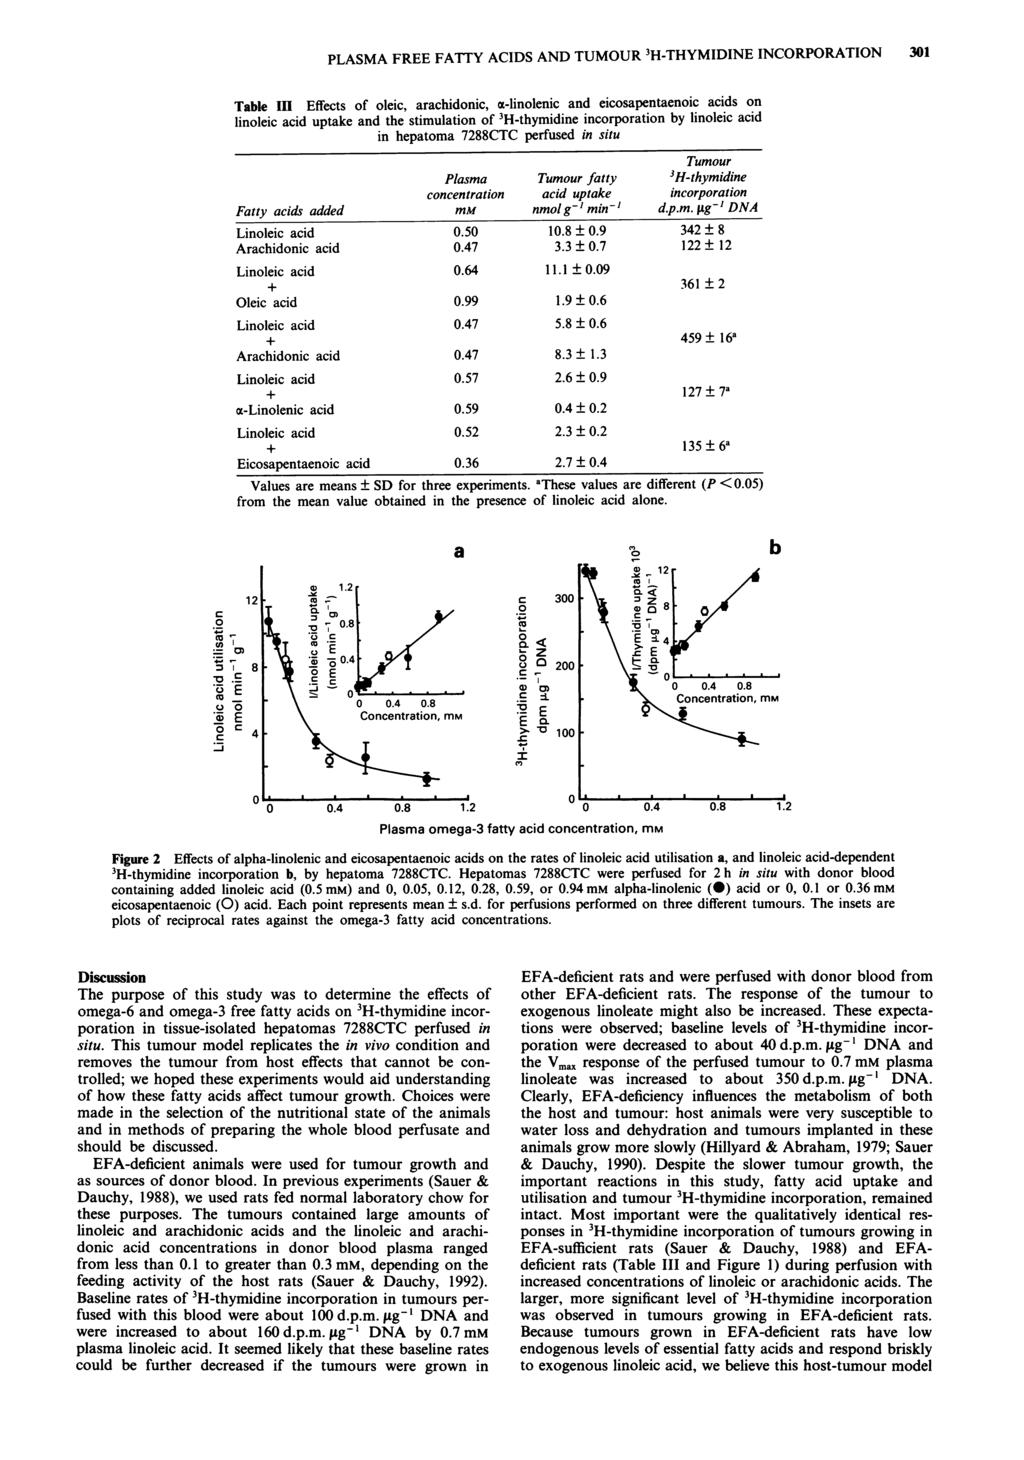 PLASMA FREE FATTY ACIDS AND TUMOUR 3H-THYMIDINE INCORPORATION 31 Table II Effets of olei, arahidoni, a-linoleni and eiosapentaenoi aids on linolei aid uptake and the stimulation of 3H-thymidine